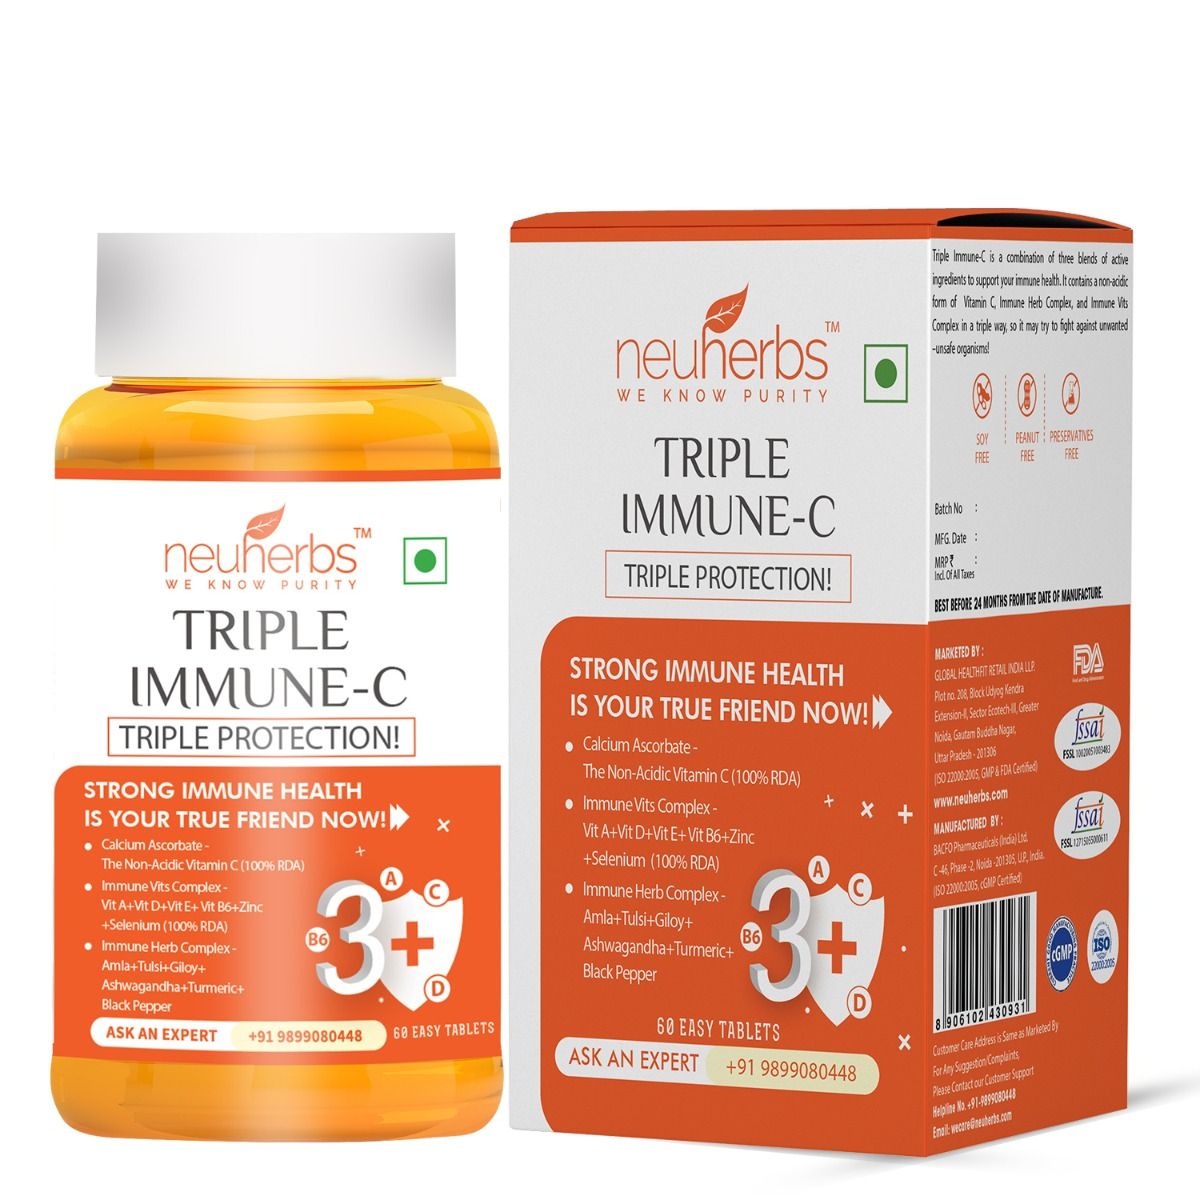 Neuherbs Triple Immune-C, 60 Tablets, Pack of 1 